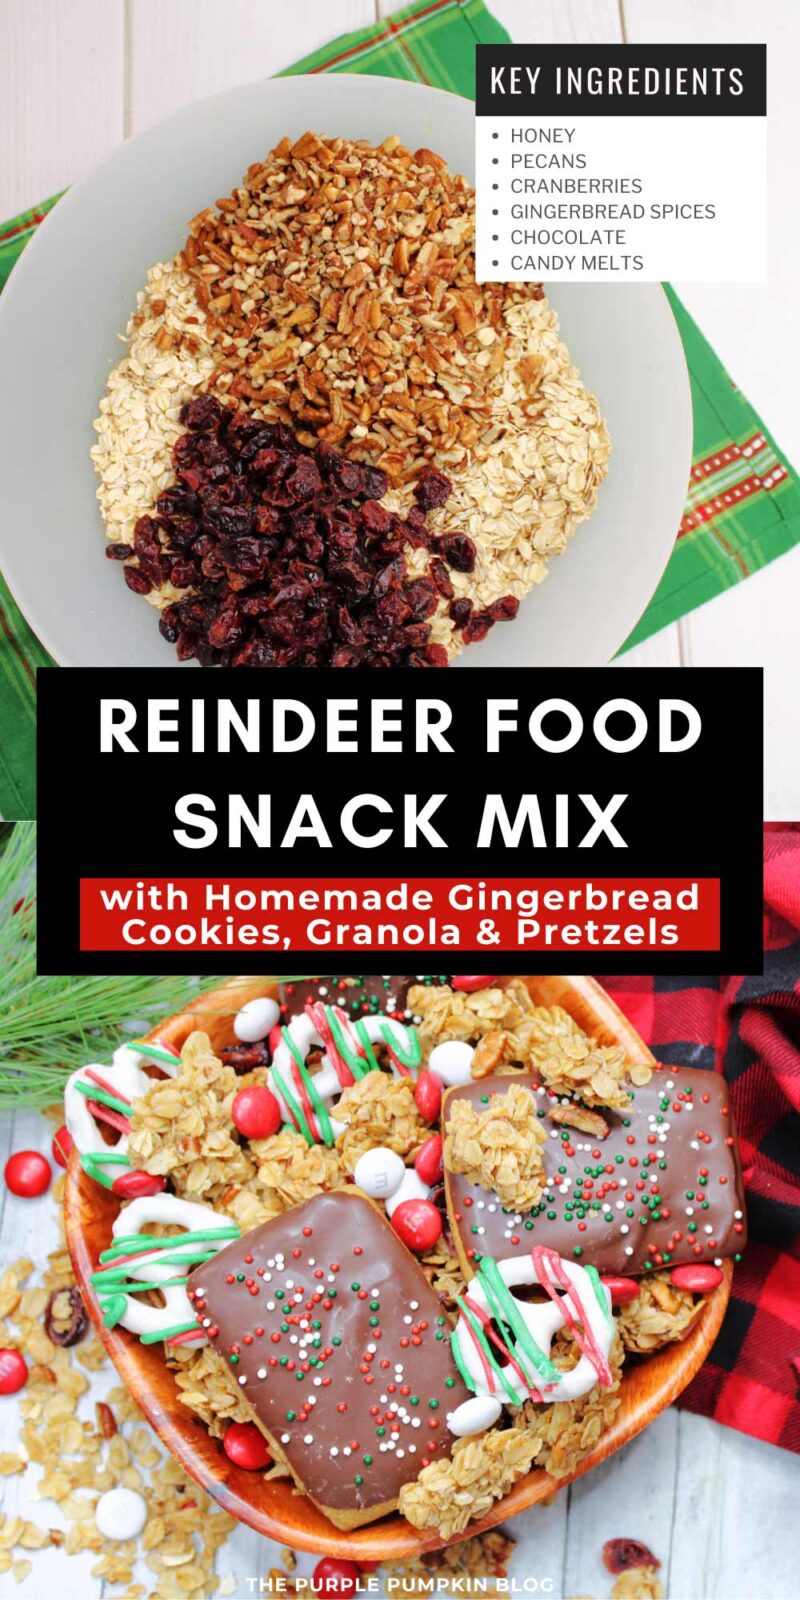 Ingredients Needed for Reindeer Food Snack Mix